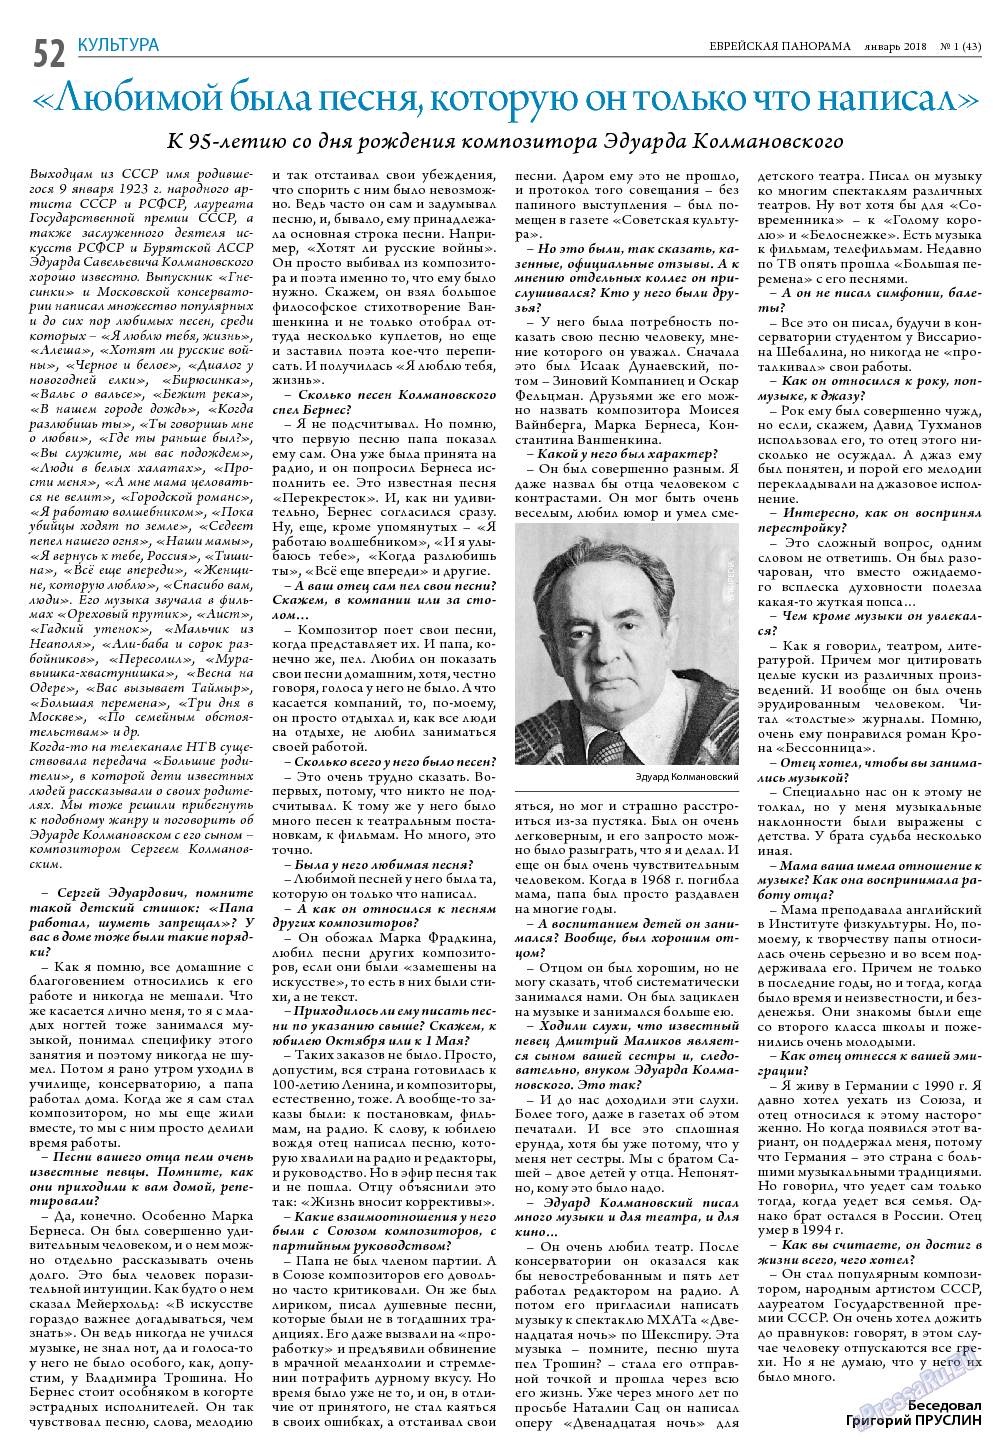 Еврейская панорама, газета. 2018 №1 стр.52